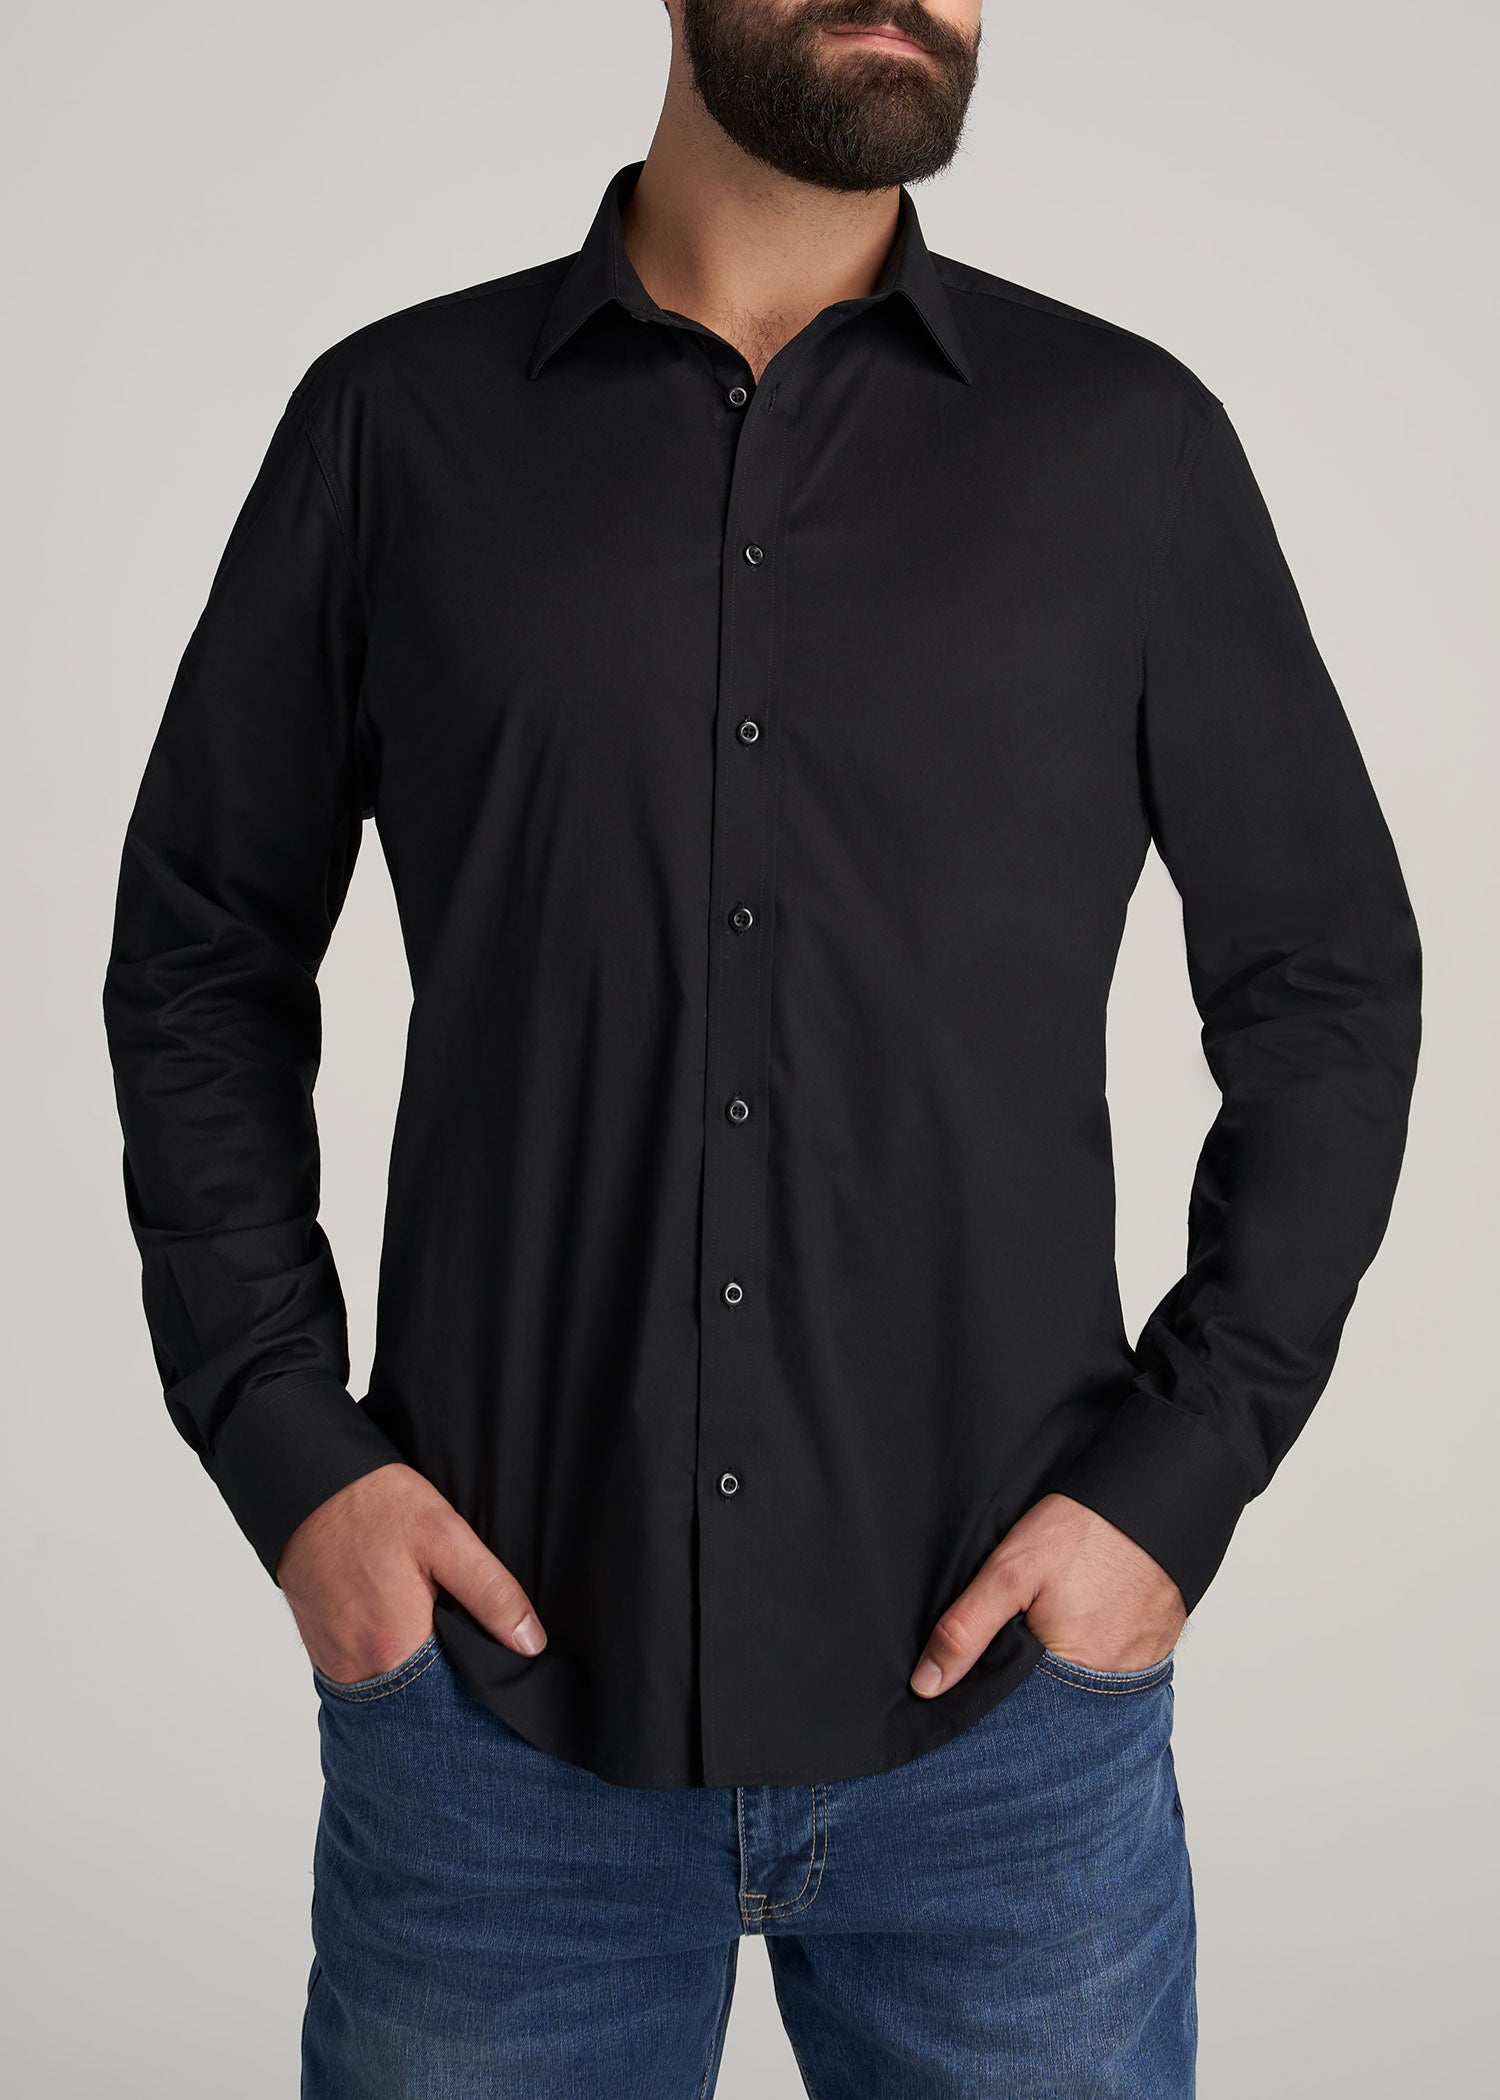 black dress shirts for men